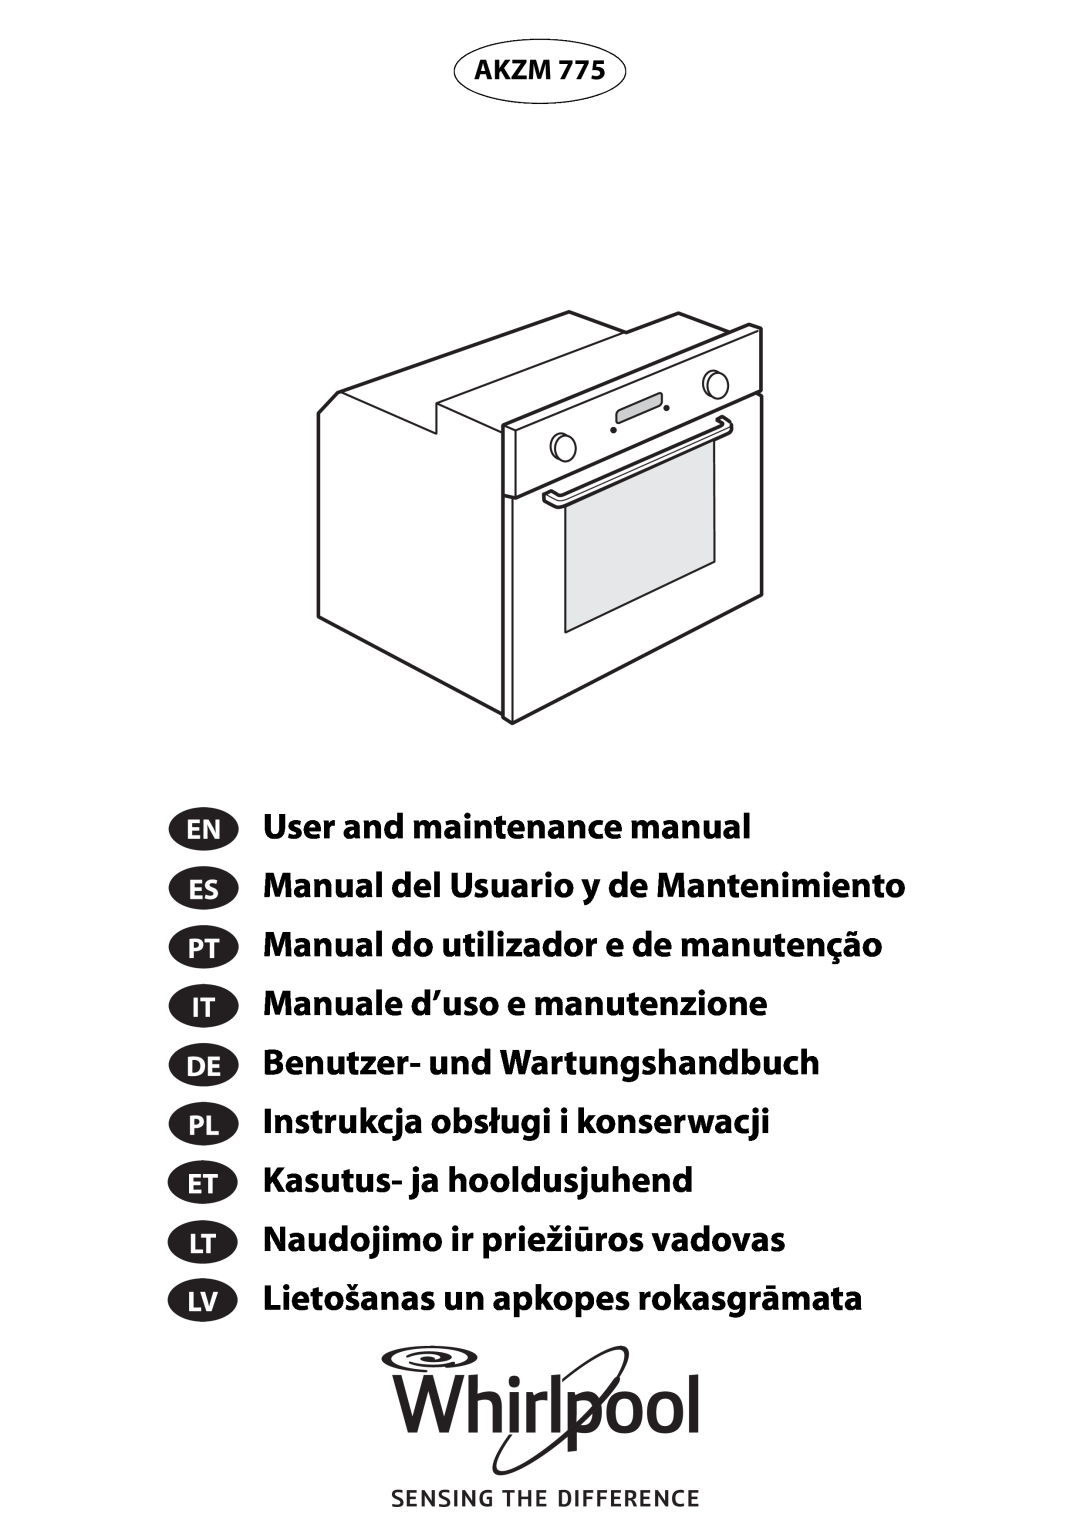 Whirlpool AKZM 775 manual do utilizador User and maintenance manual, Akzm, En It 